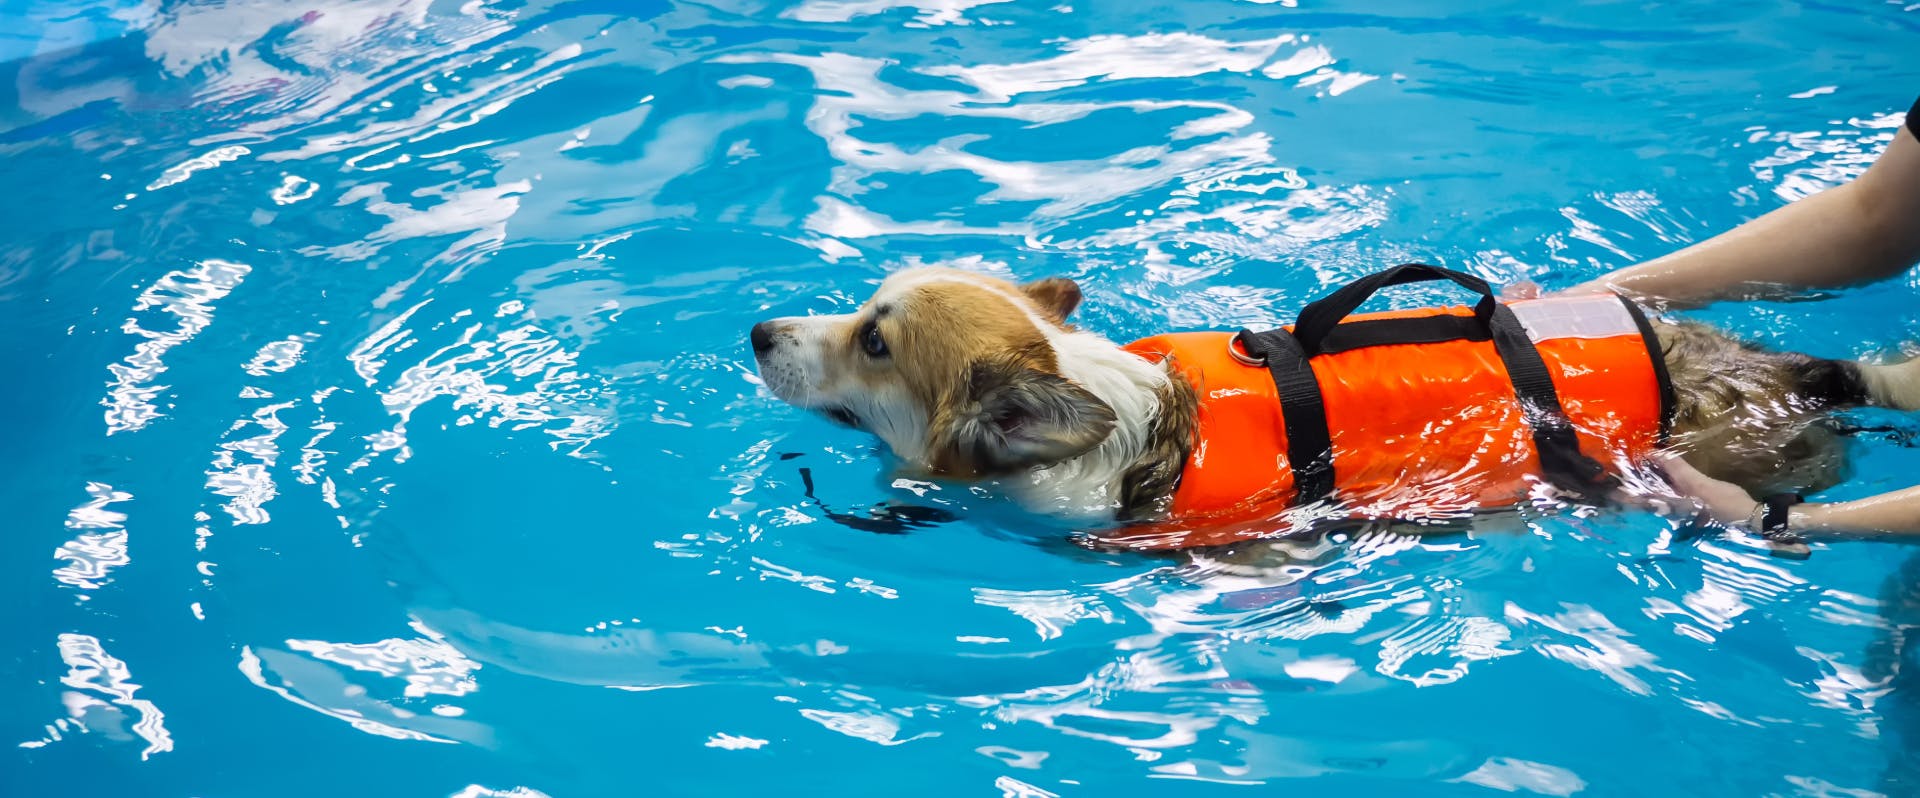 A corgi in a swimming pool wearing an orange dog life vest